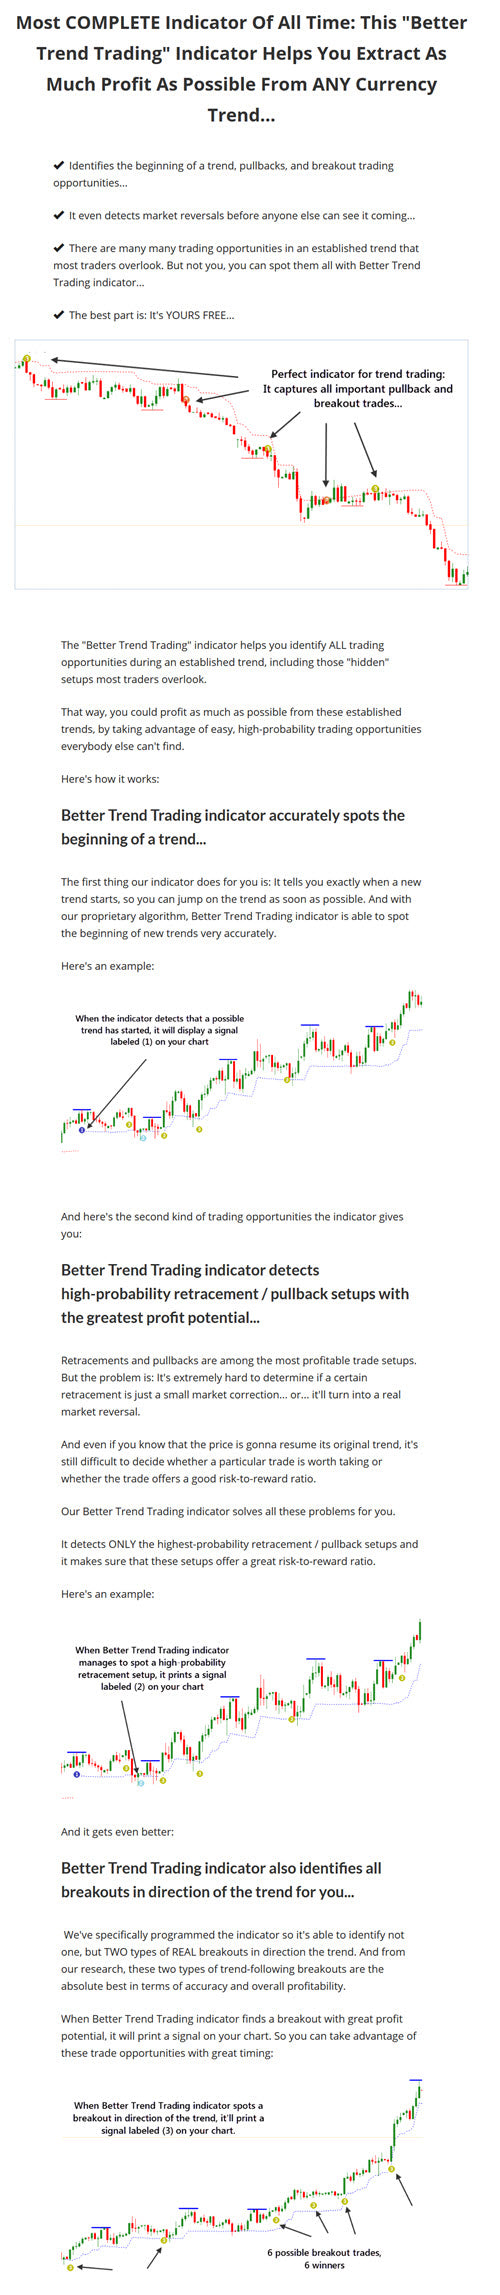 Trend Trading Indicator